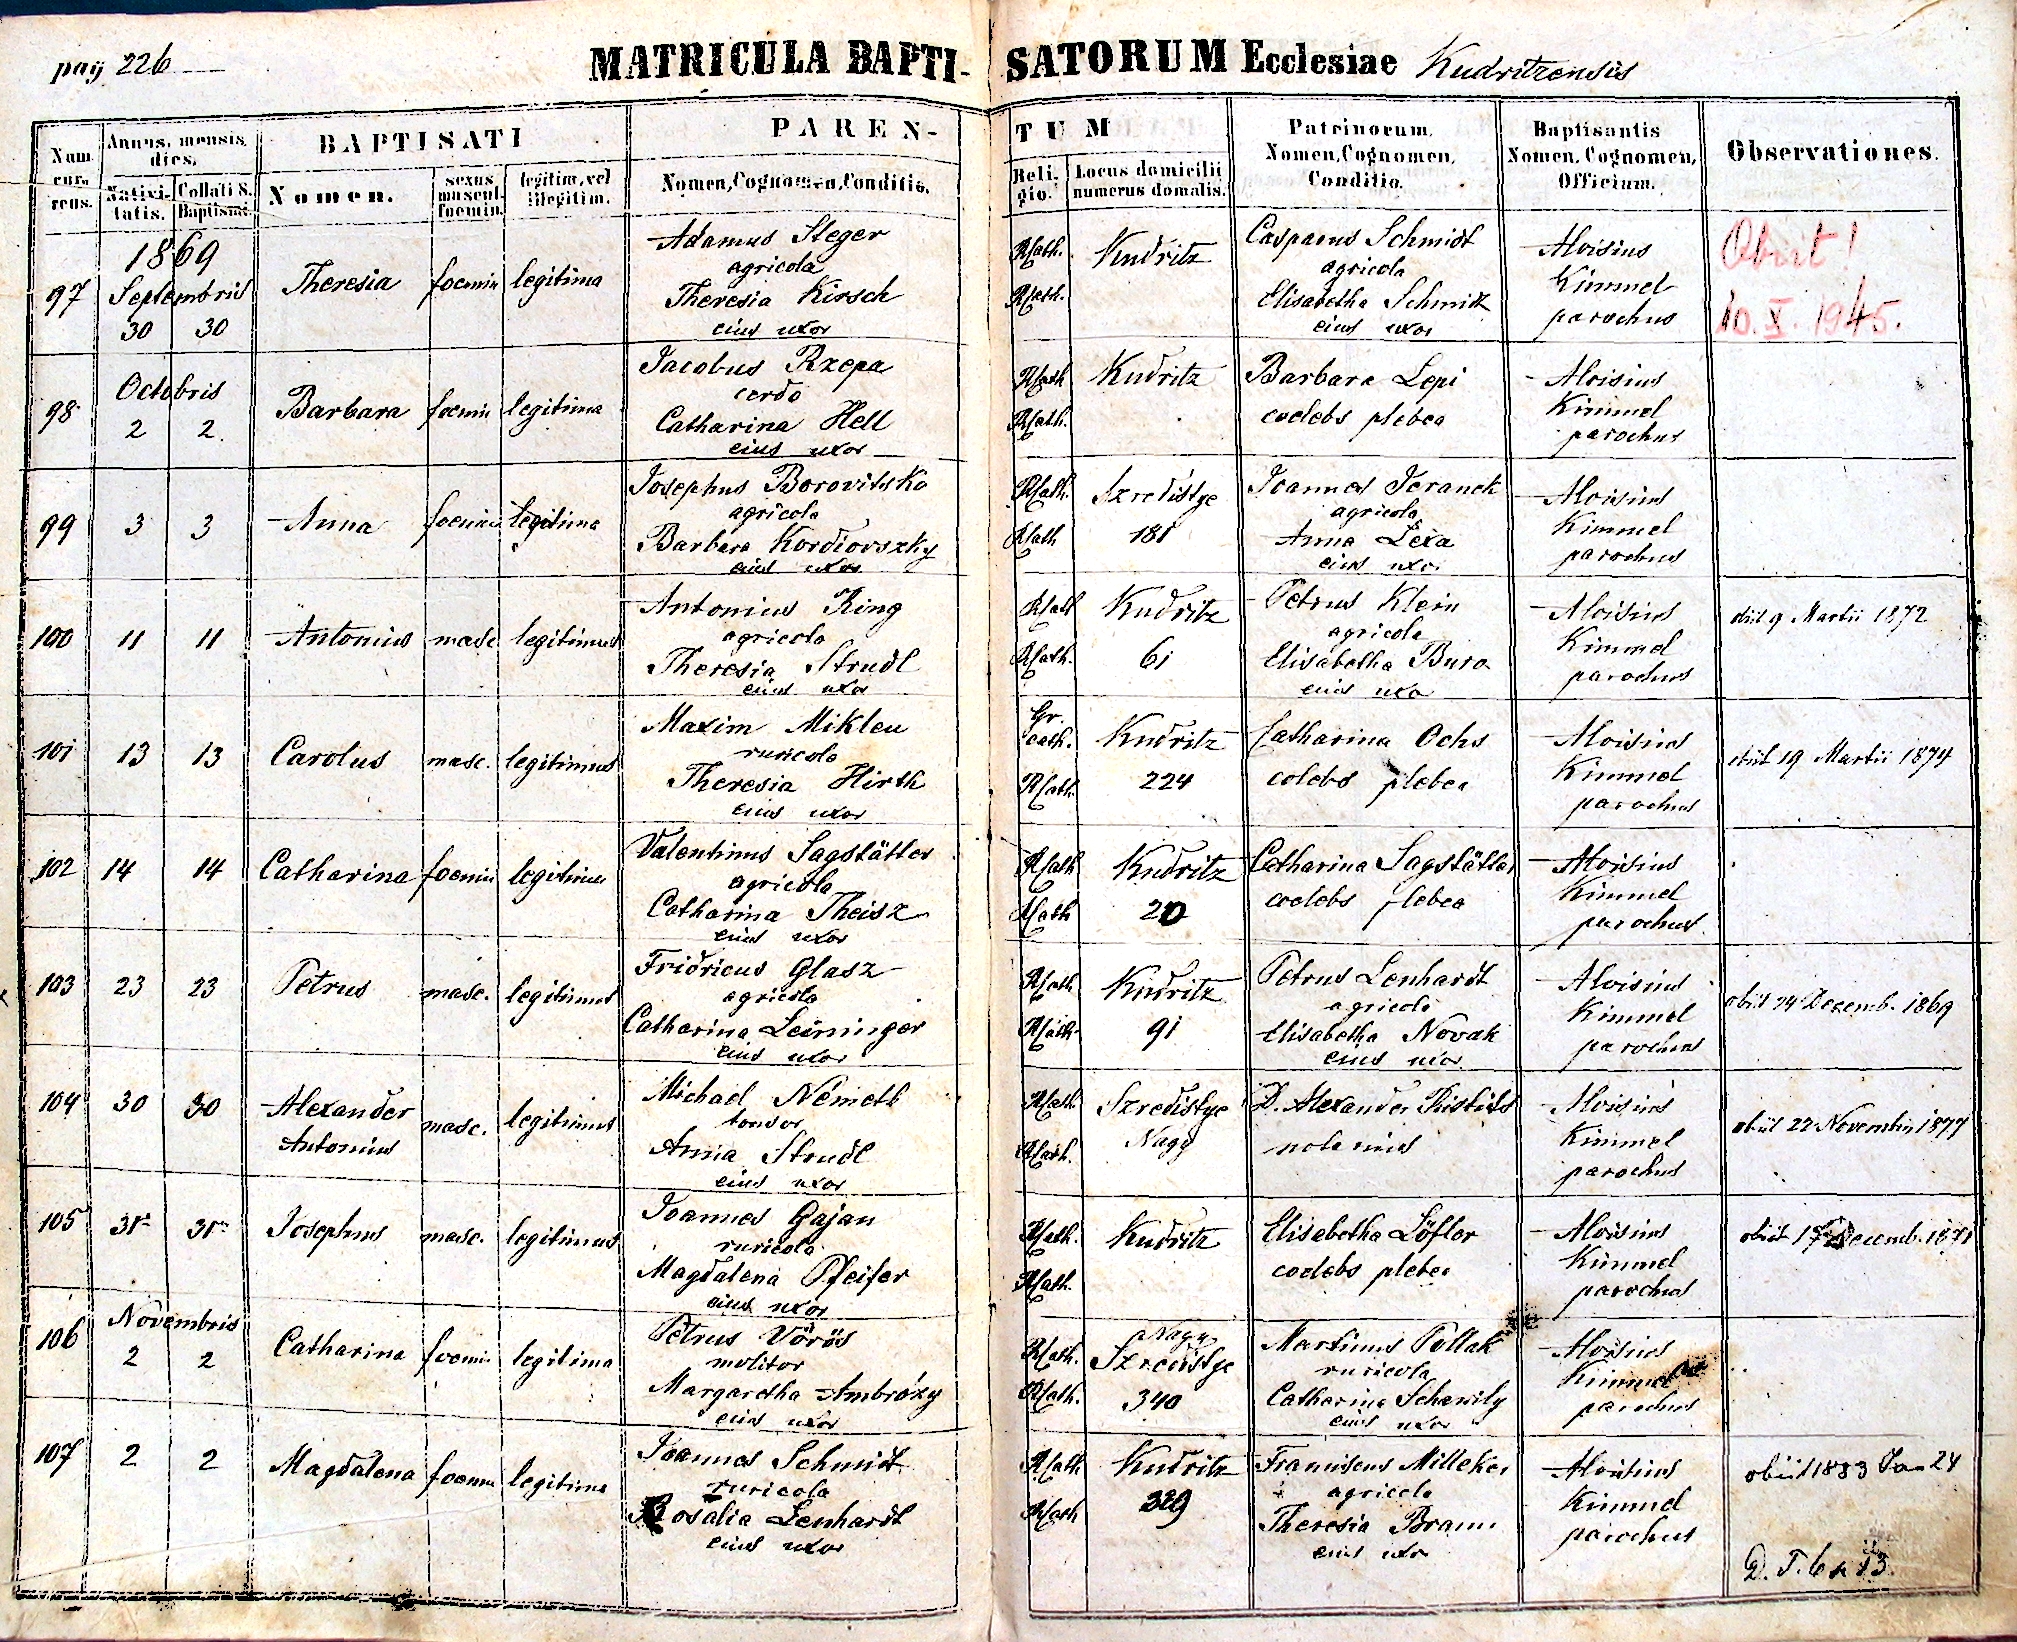 images/church_records/BIRTHS/1852-1870B/226